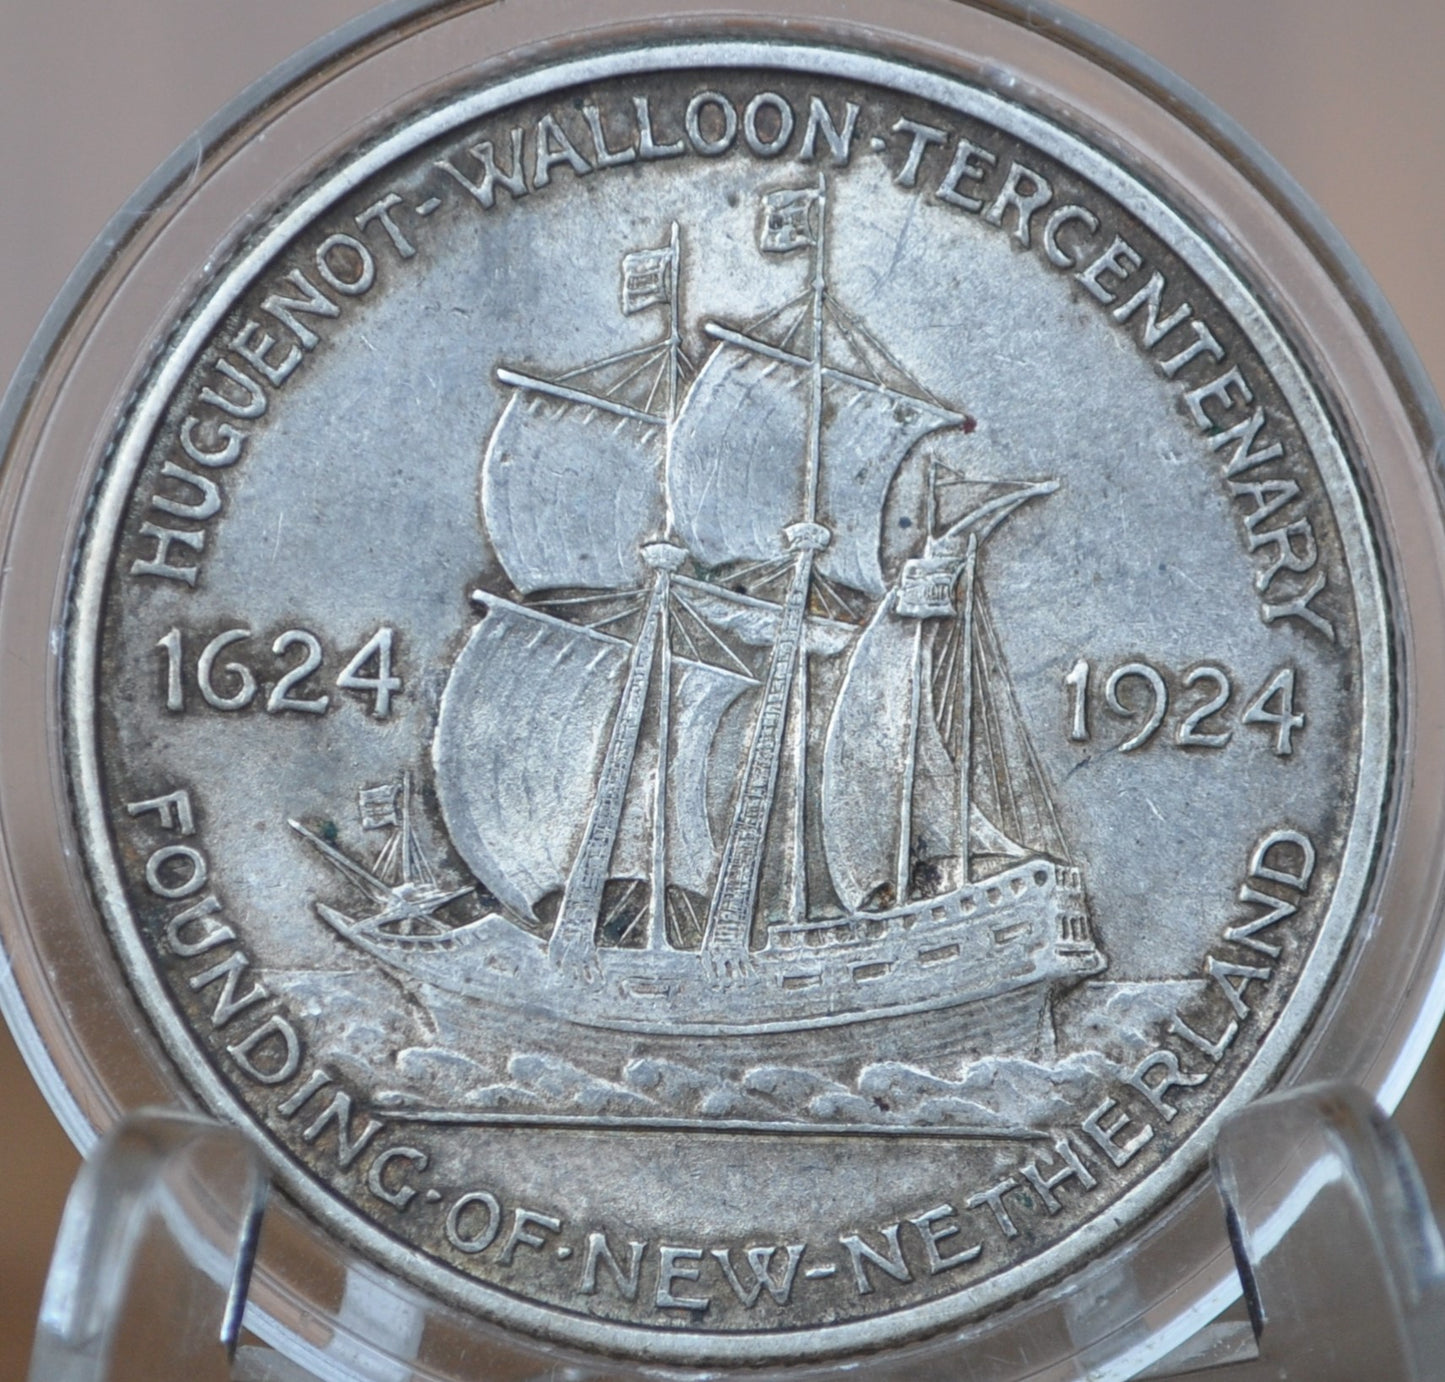 Authentic 1924 Huguenot Tercentenary Silver Commemorative Half Dollar - Uncirculated - Huguenot Half Dollar Commemorative 1924